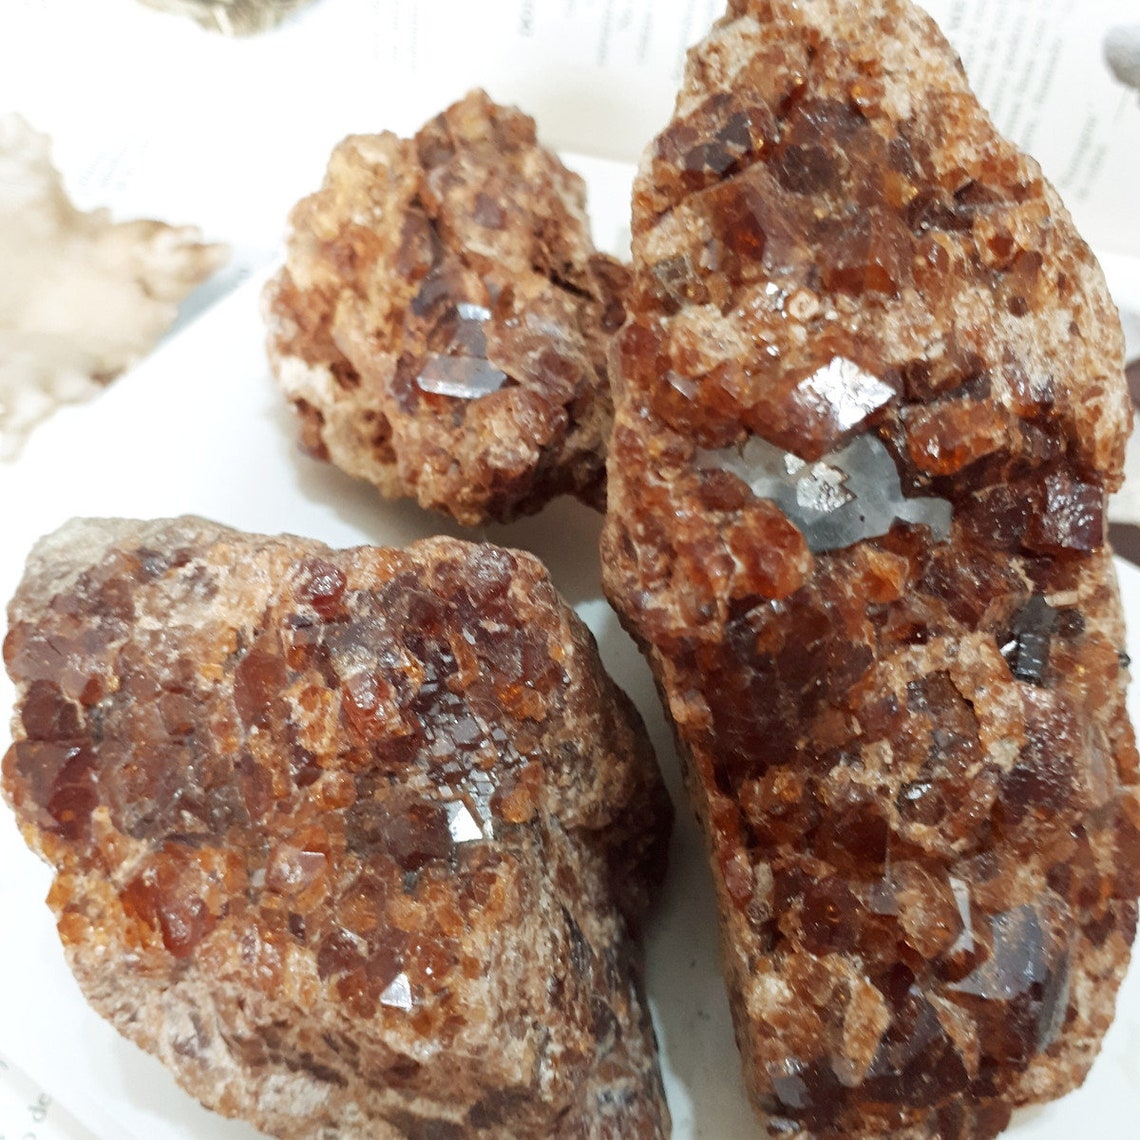 Garnet Gemstone, Rough Natural Stones